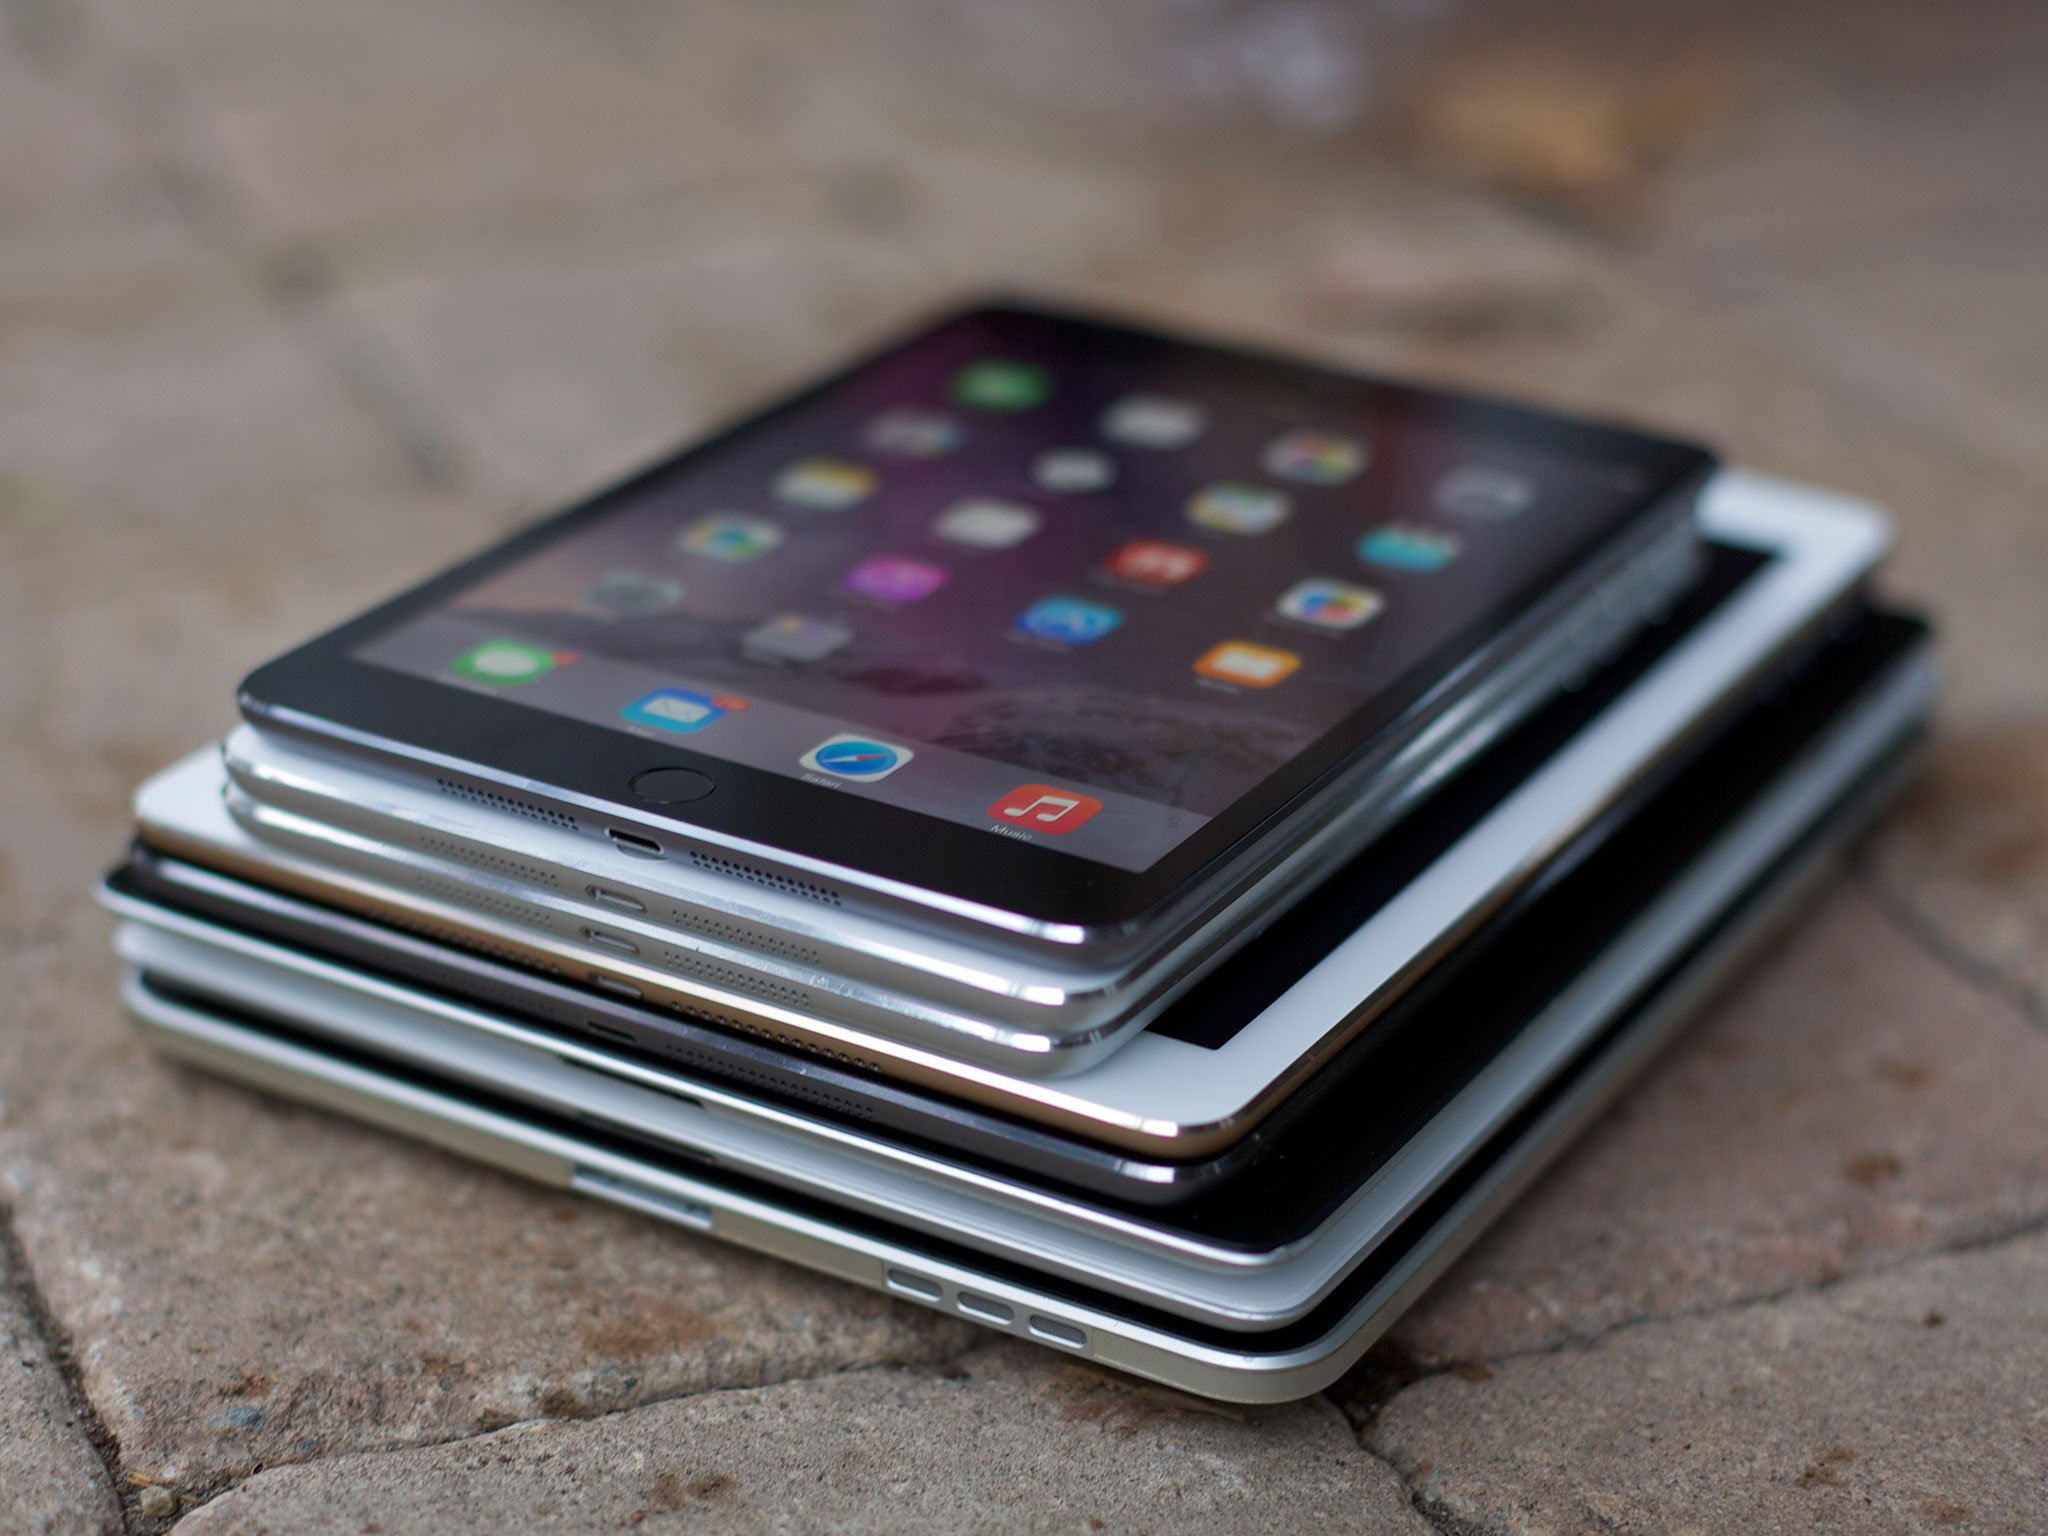 iPad Air 2 and iPad mini 3